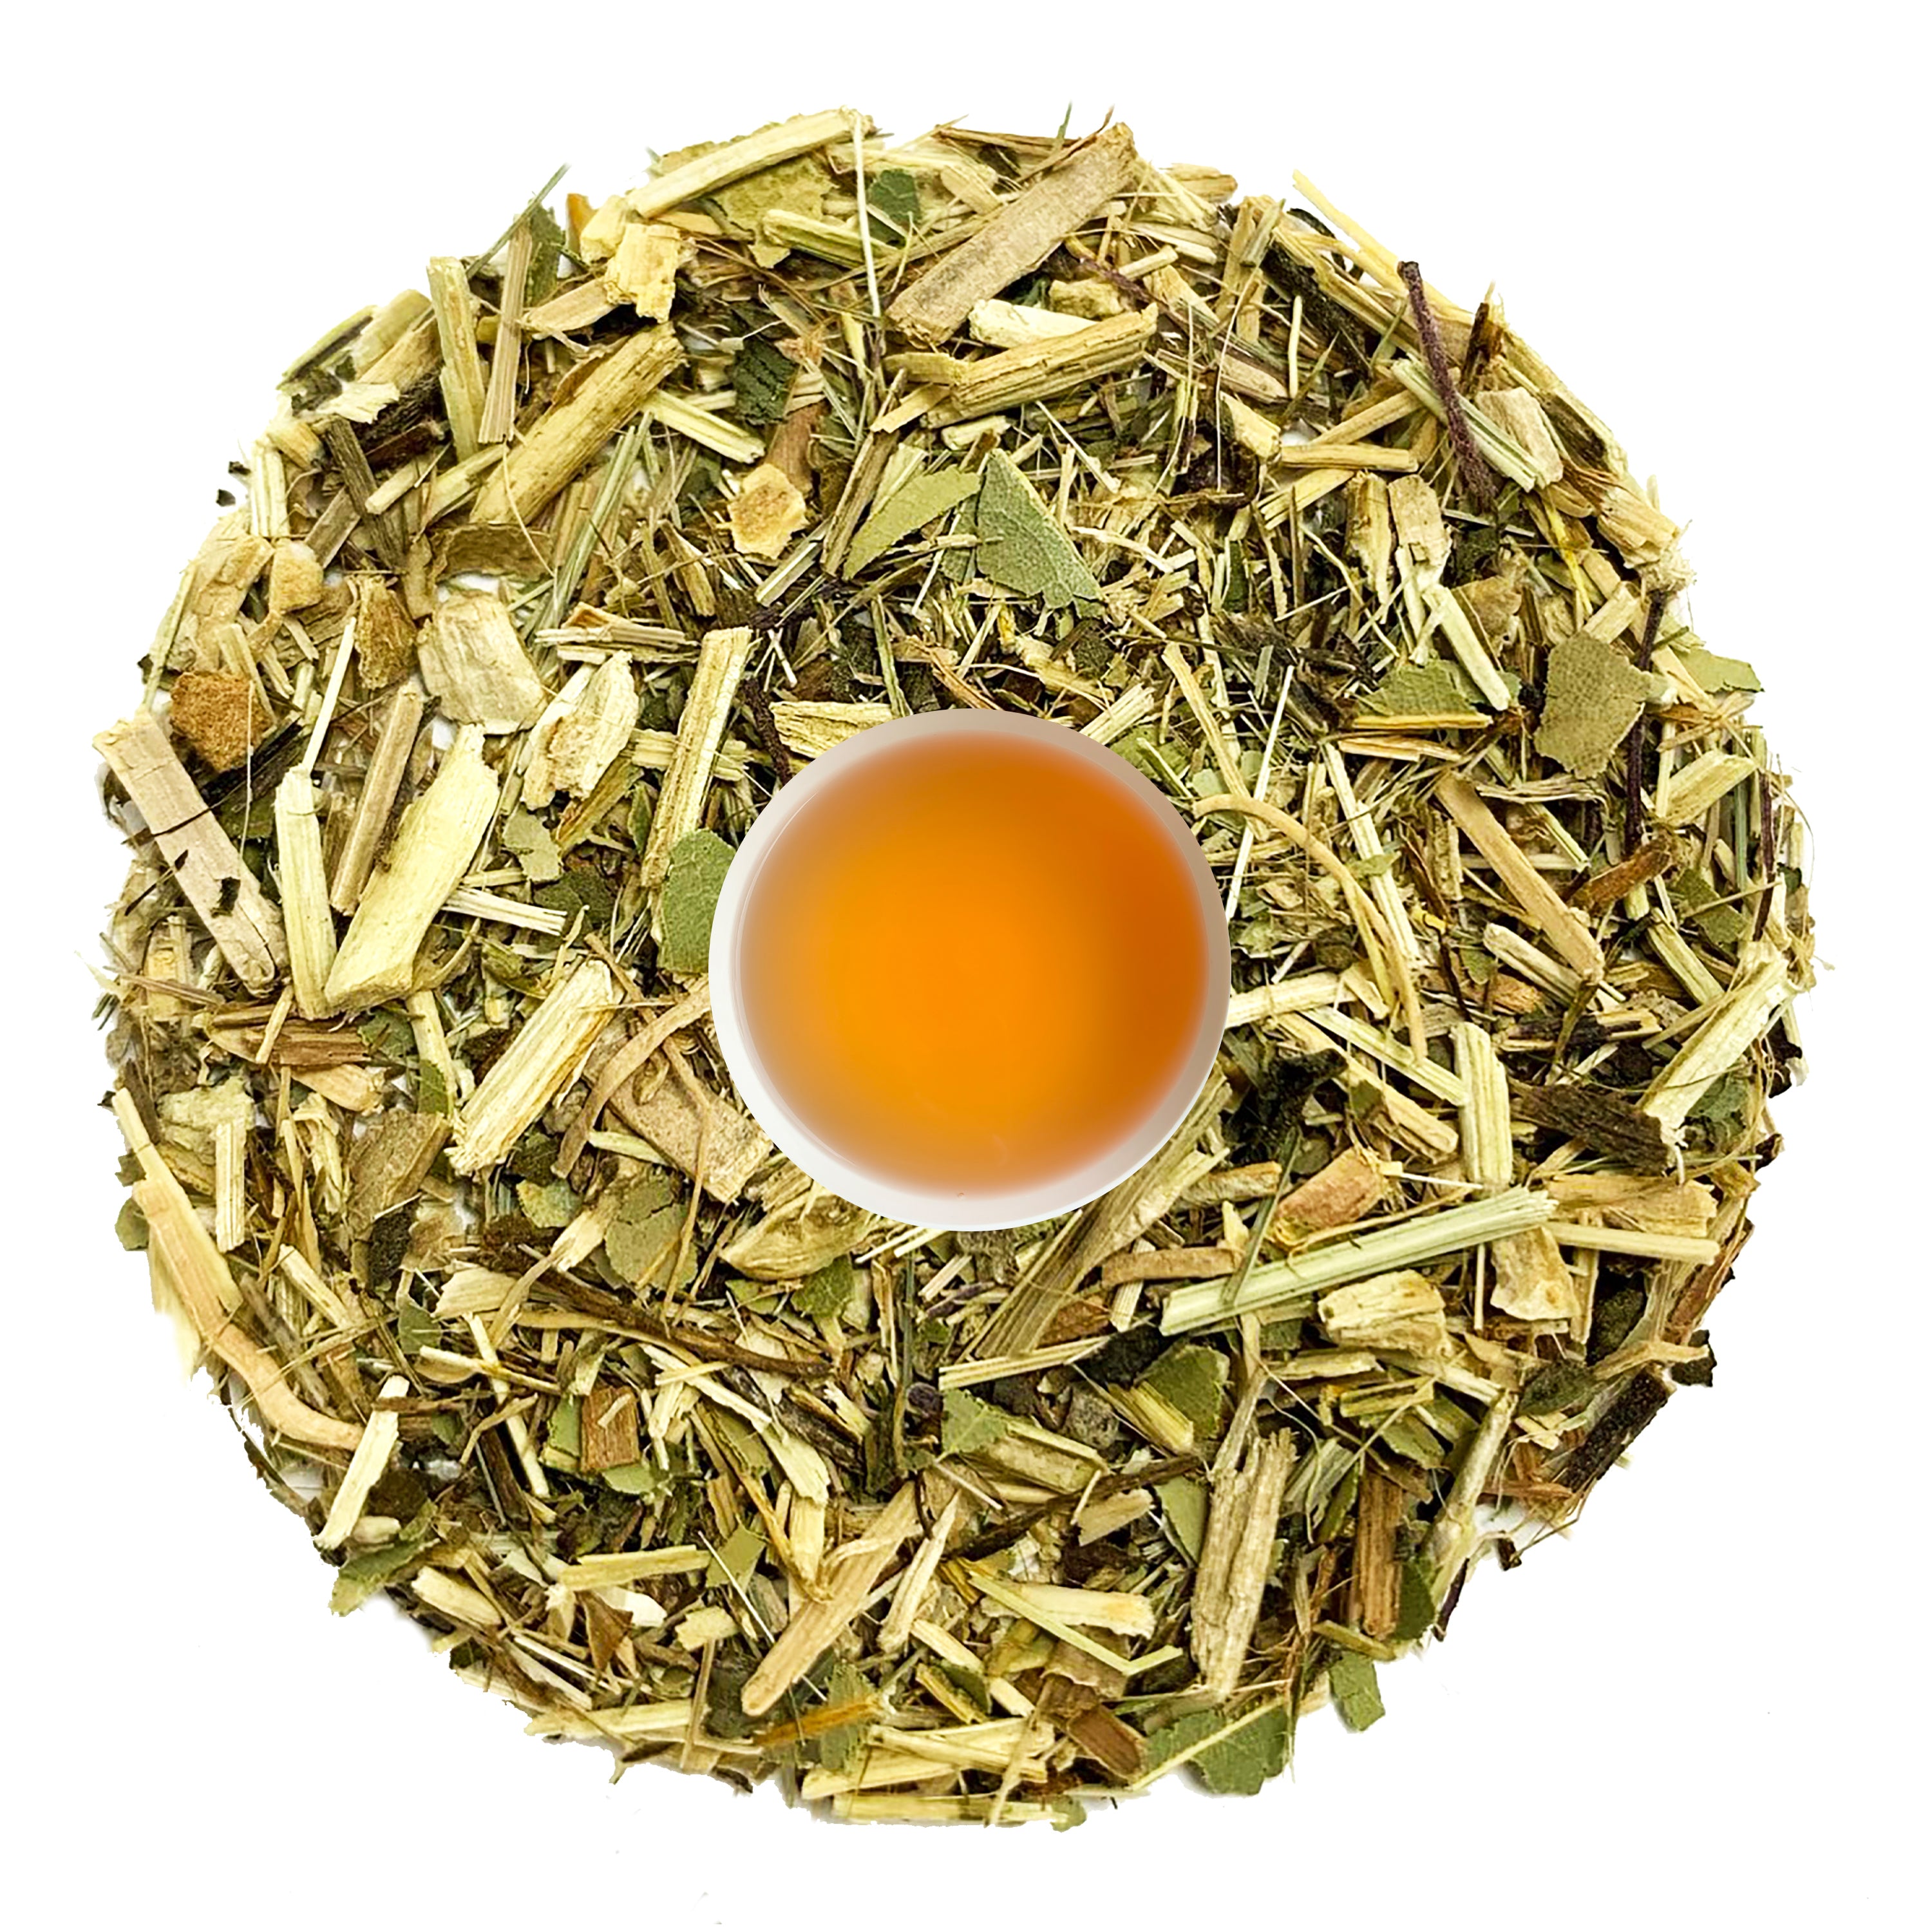 Tulsi Herbal Tea (Holy Basil)